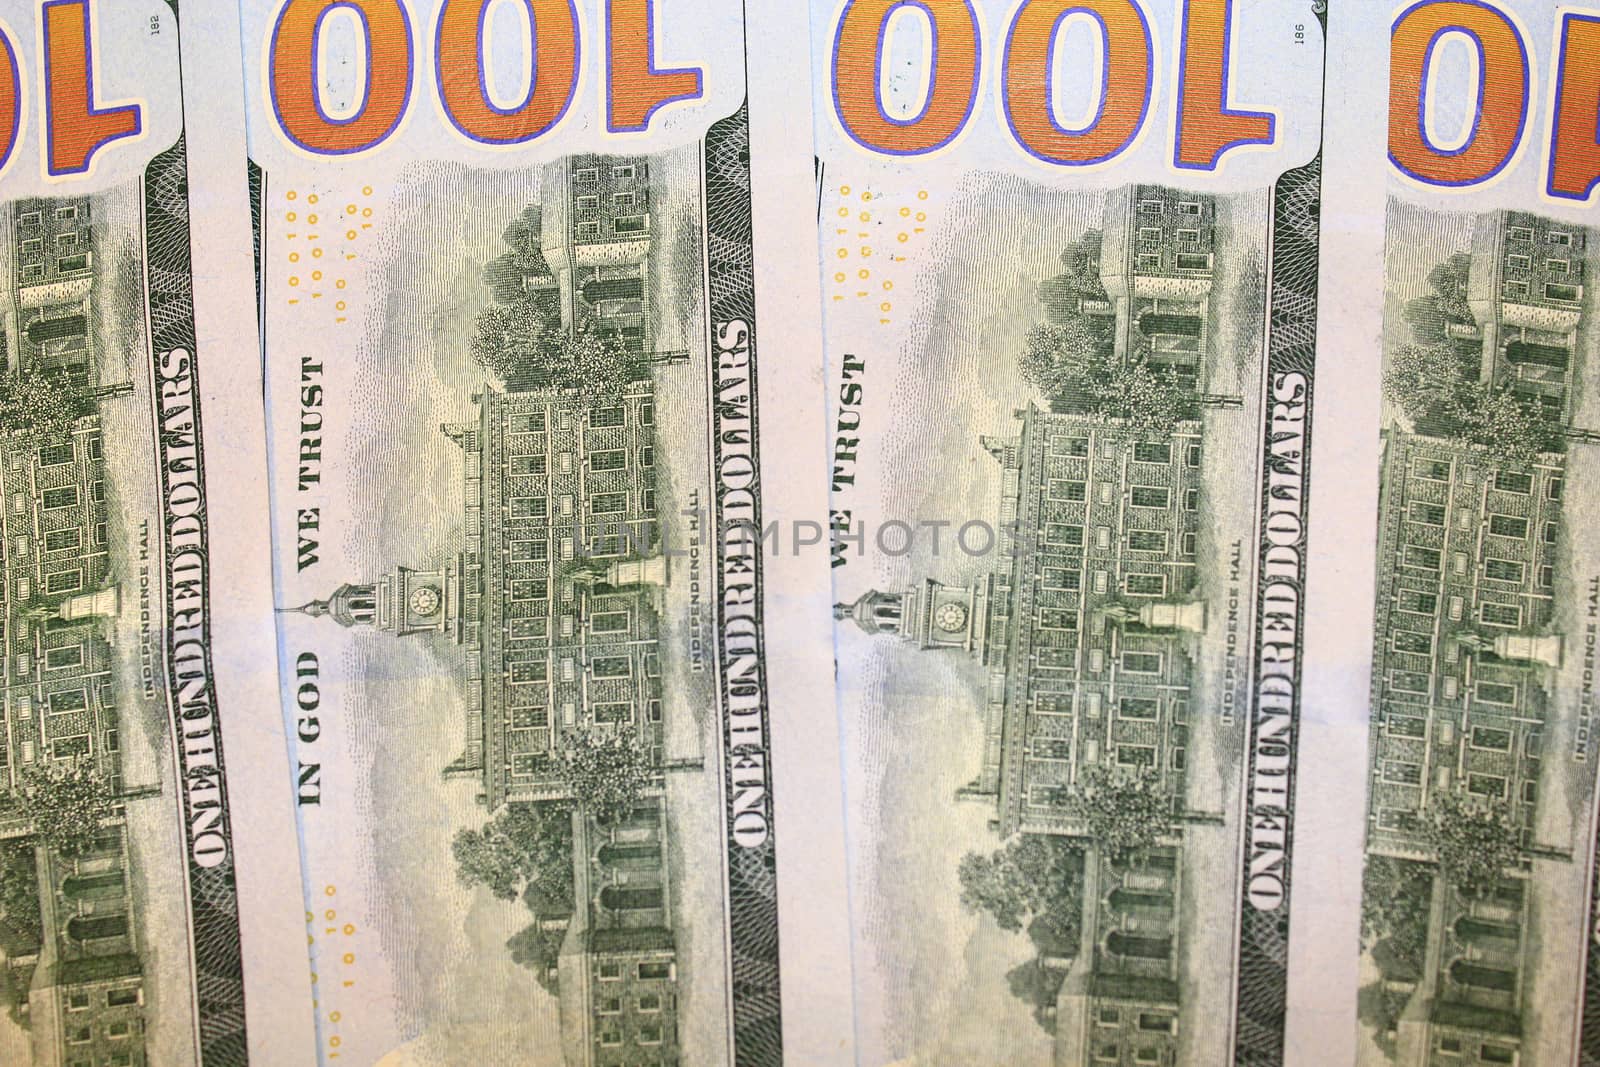 cash in hundred dollar bank notes